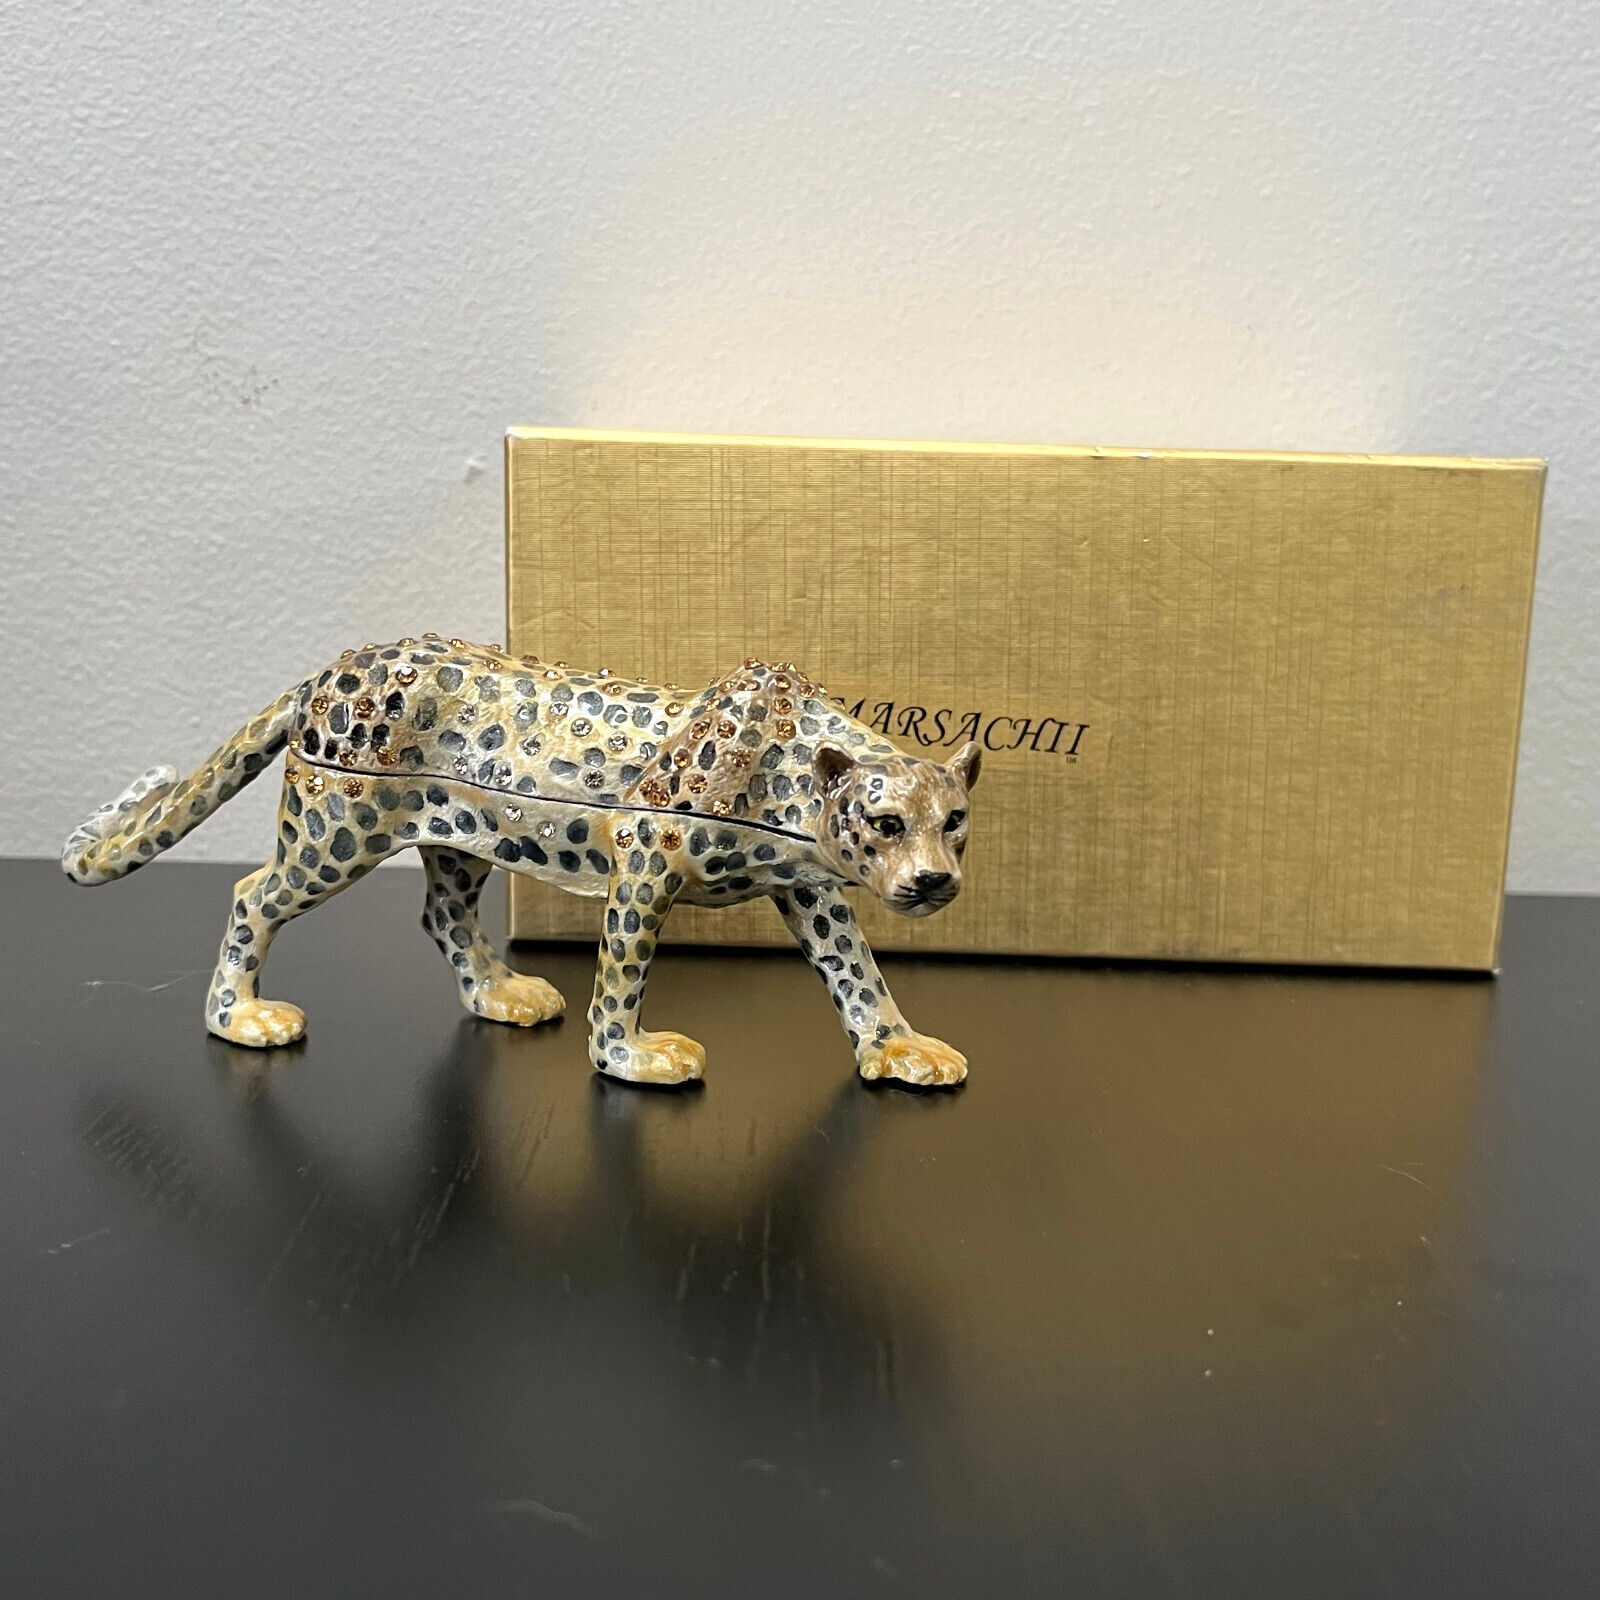 Marsachii Jaguar Jeweled Hinged Trinket Box 5.5in Mint in Box